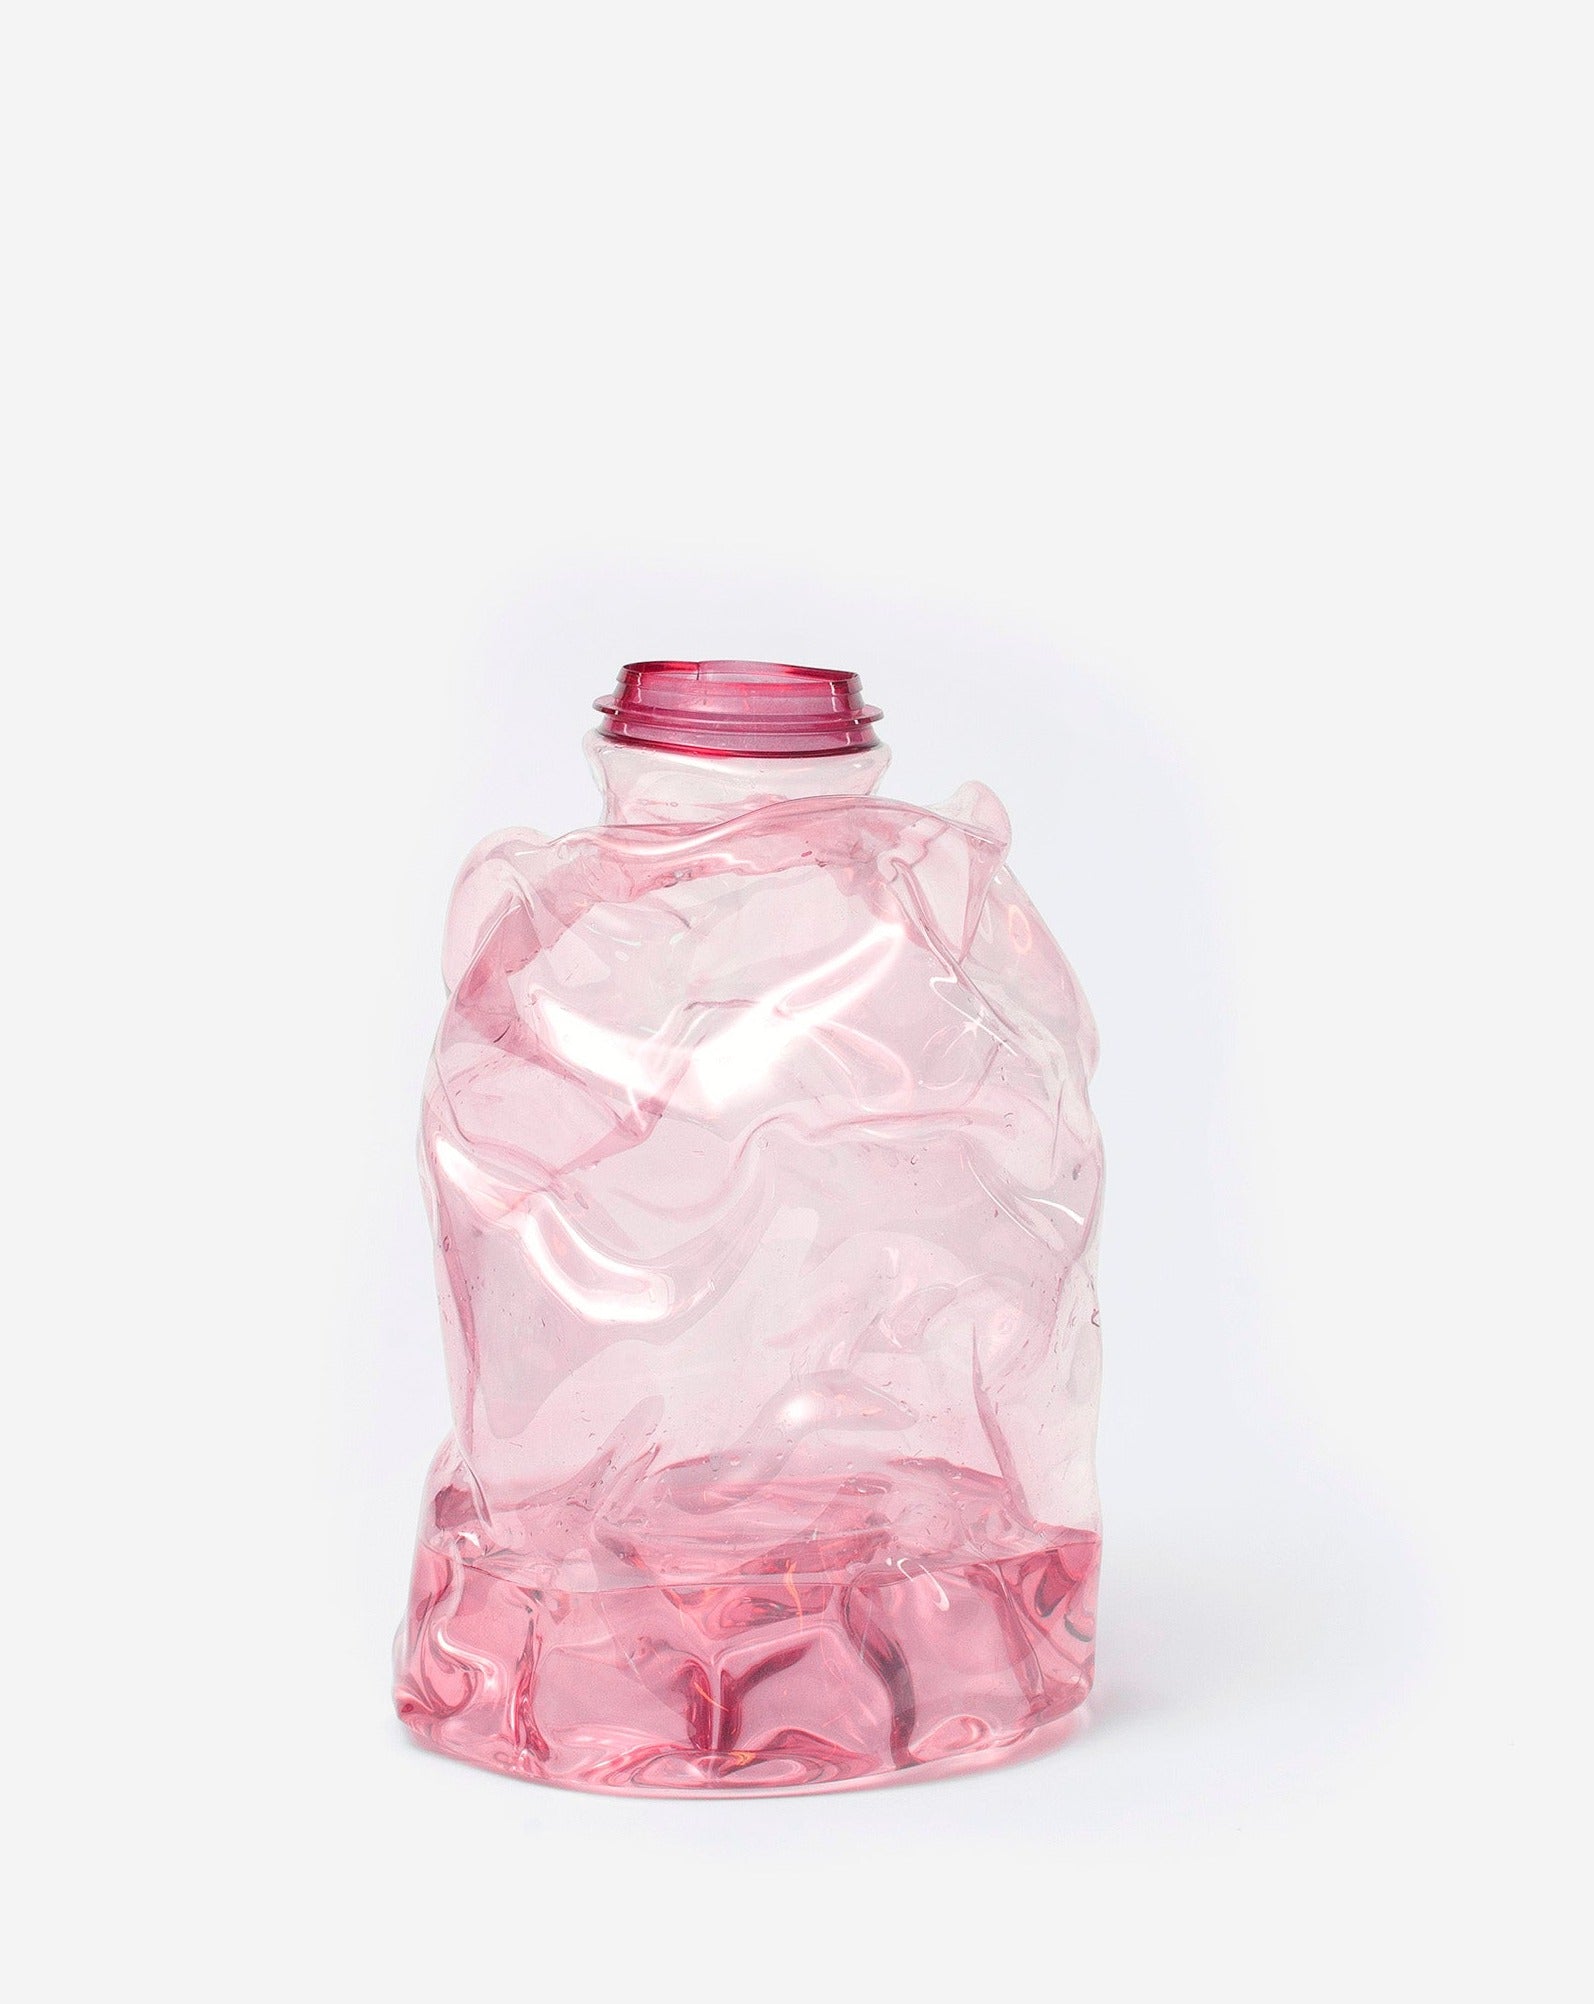 Large pink handmade recycled plastic vase on white background